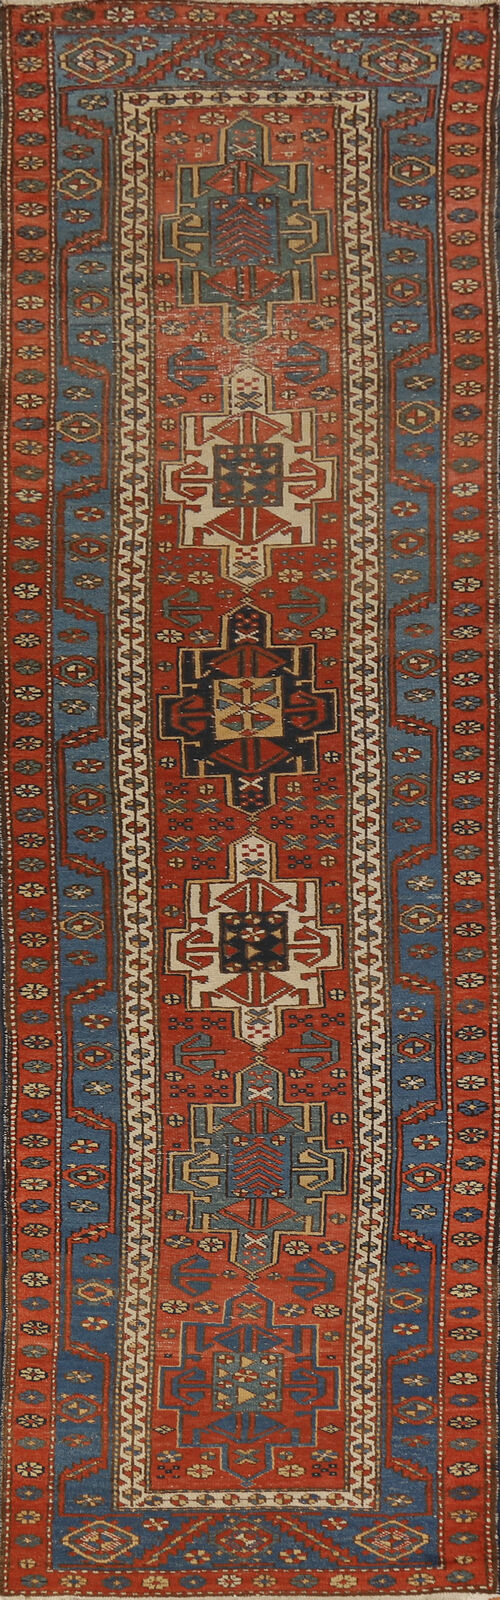 Vegetable Dye Antique Heriiz Serapi Runner Rug 3x13 Wool Handmade Hallway Carpet